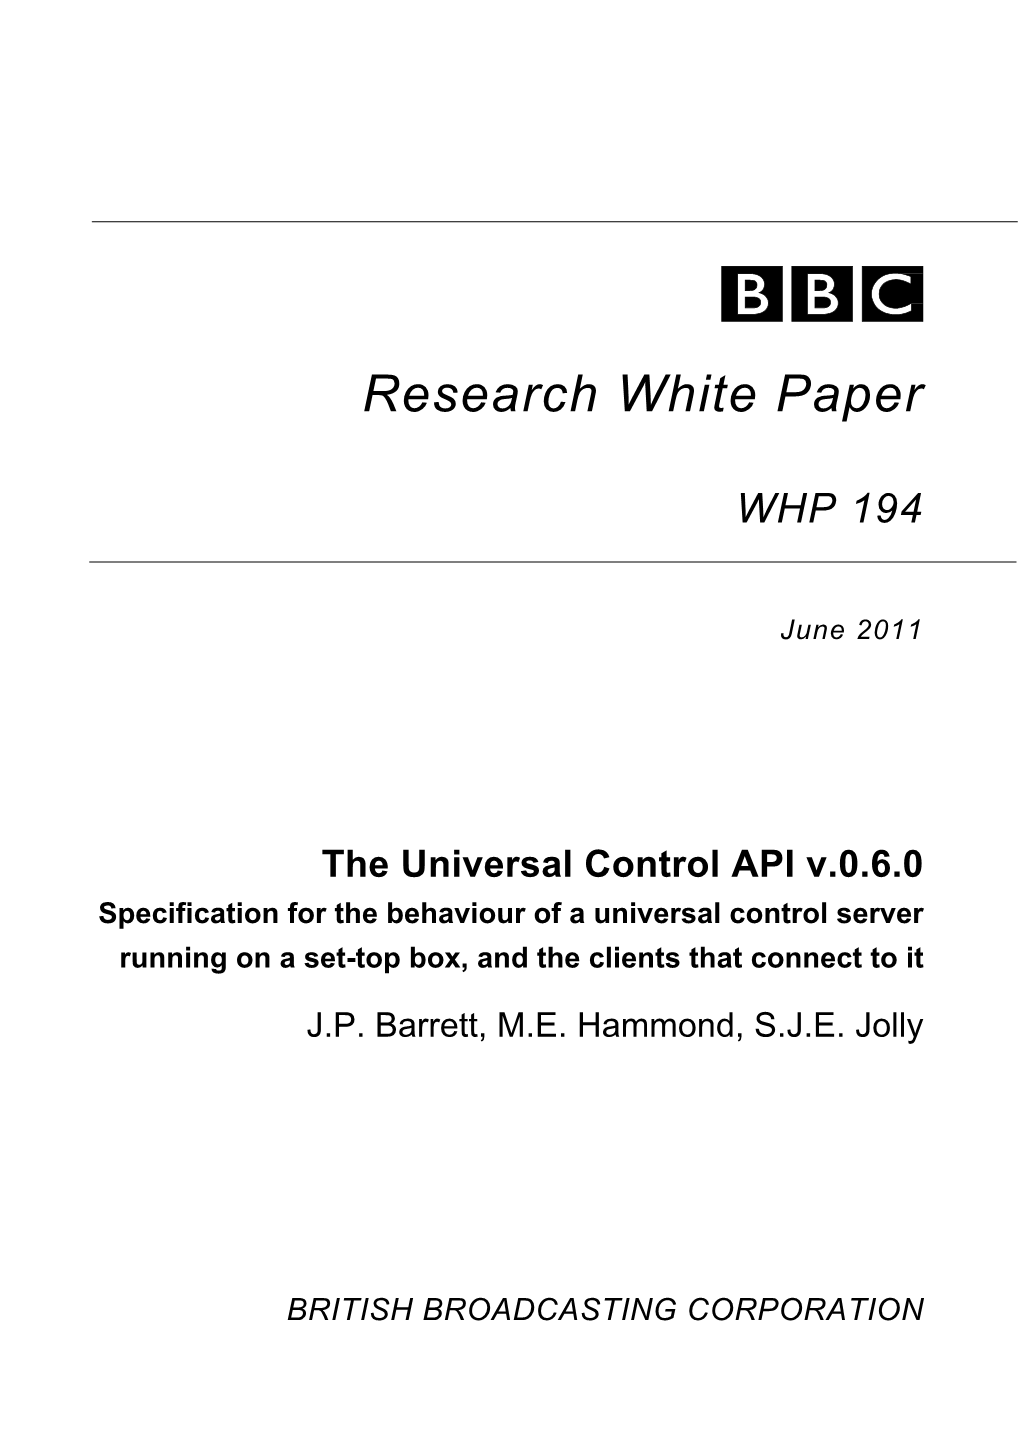 BBC R&D White Paper WHP194